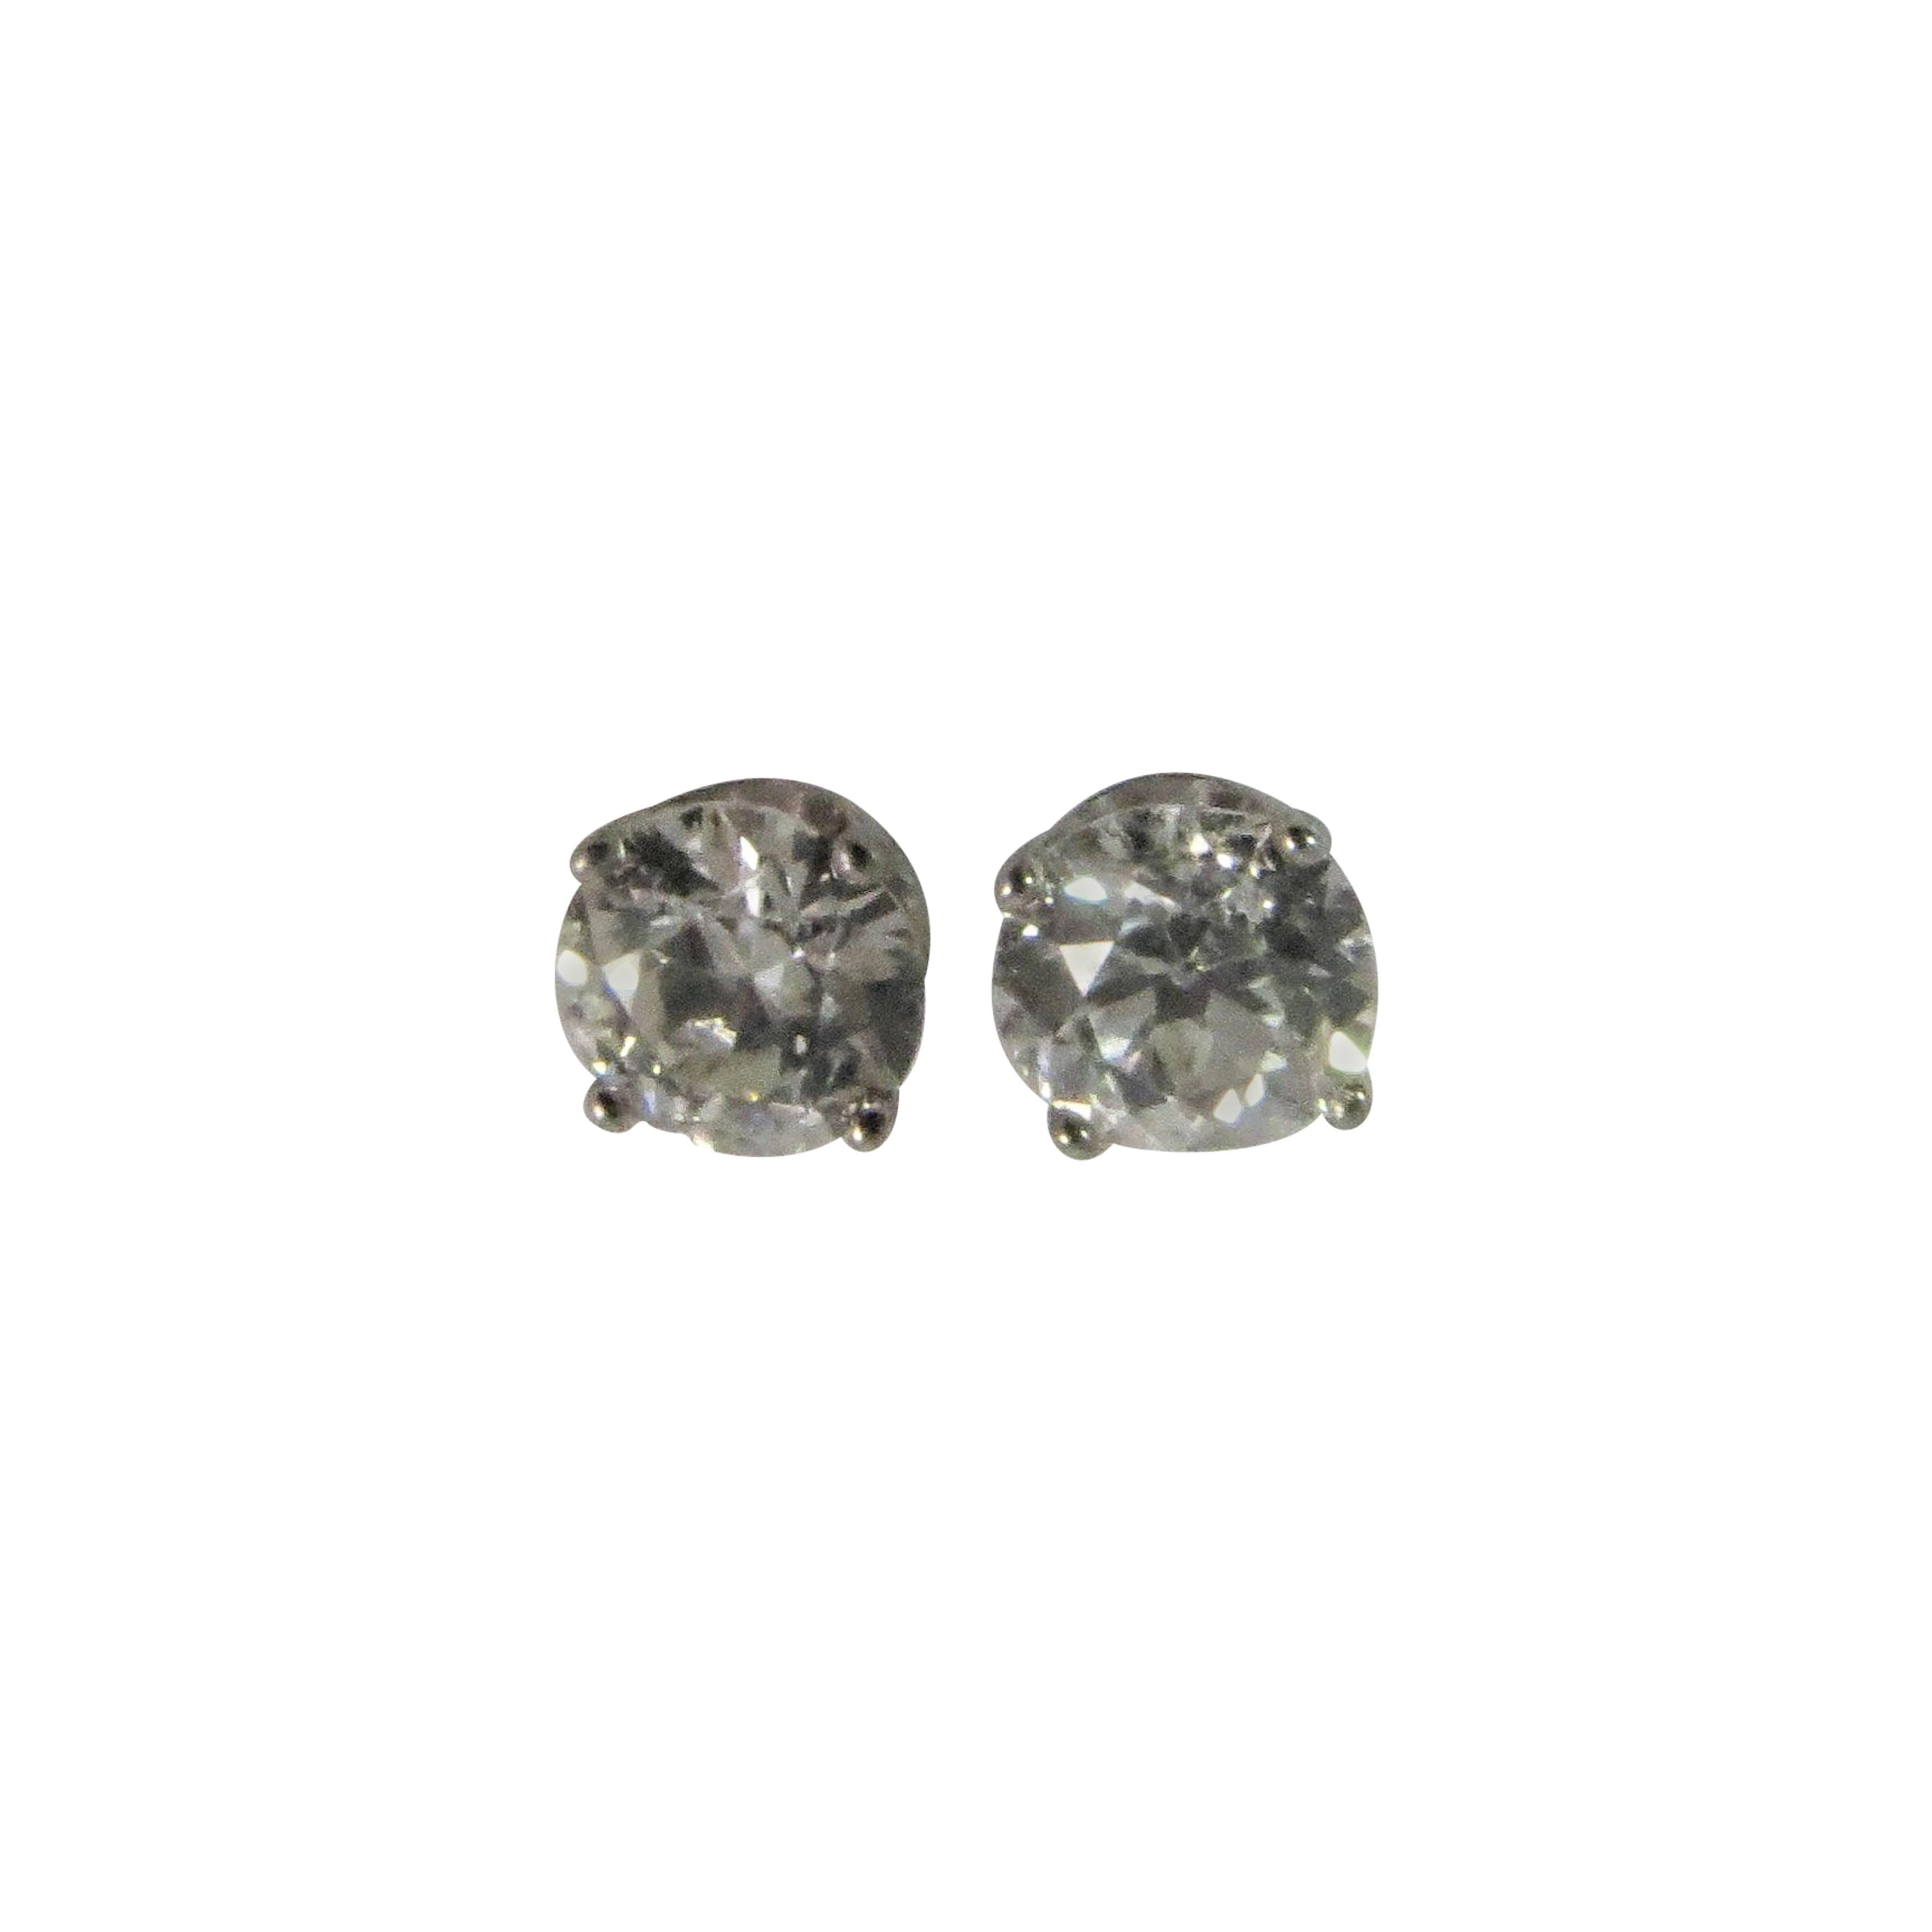 European Cut Diamond Stud Earrings Set In Platinum Four Prong Settings